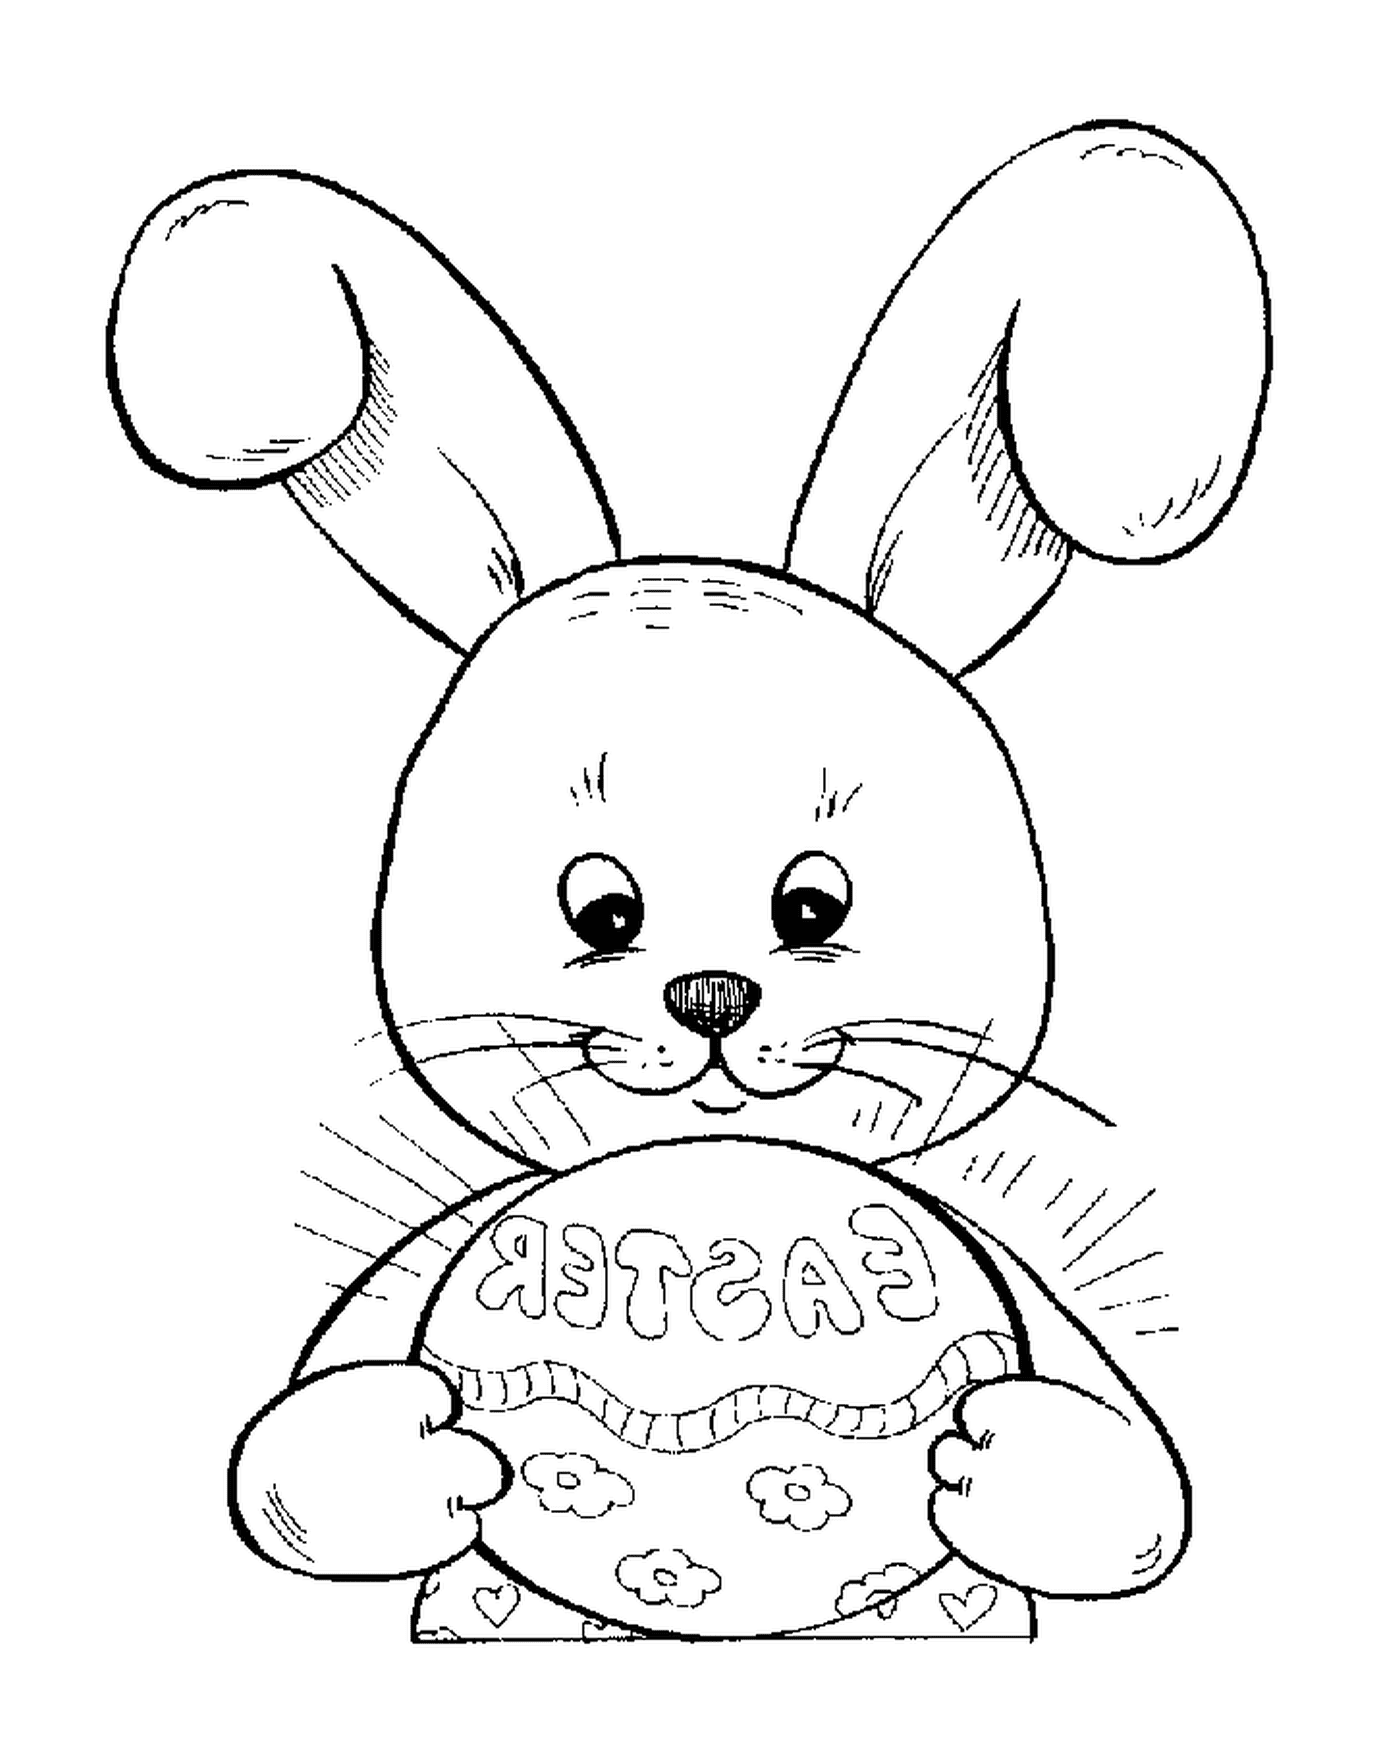  An Easter rabbit holding an Easter egg 